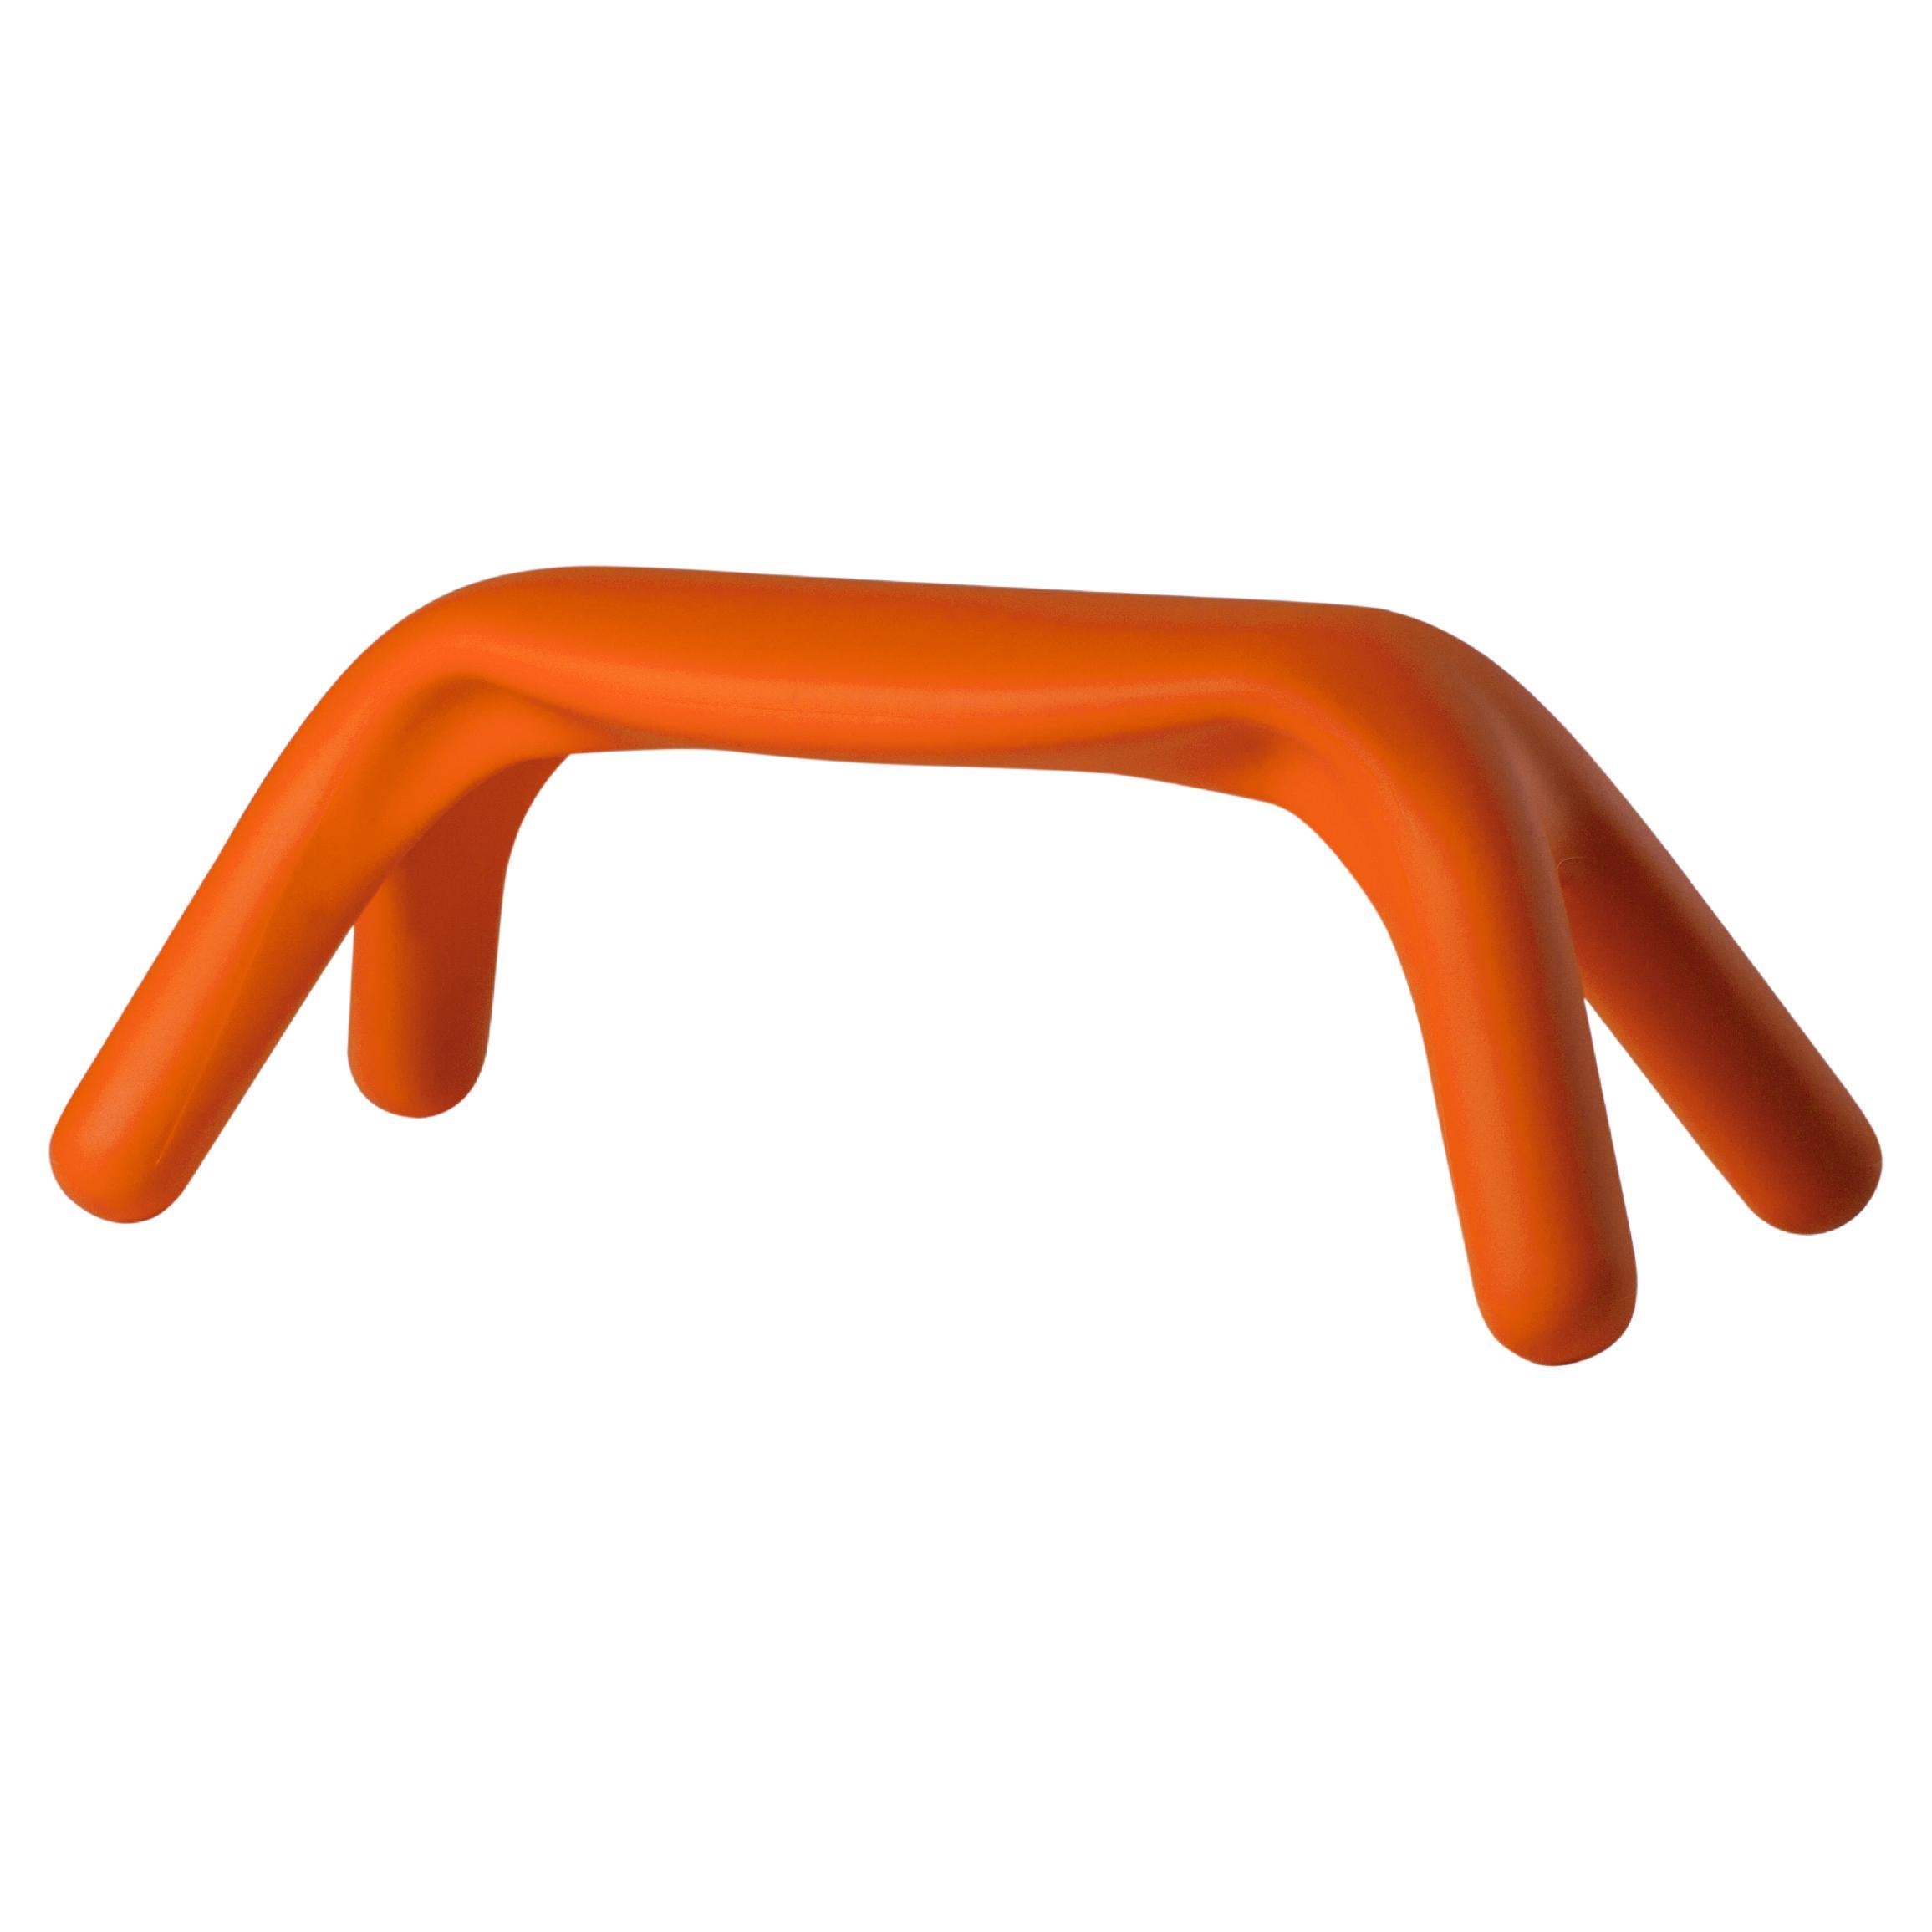 Slide Design Atlas Bench in Pumpkin Orange by Giorgio Biscaro For Sale